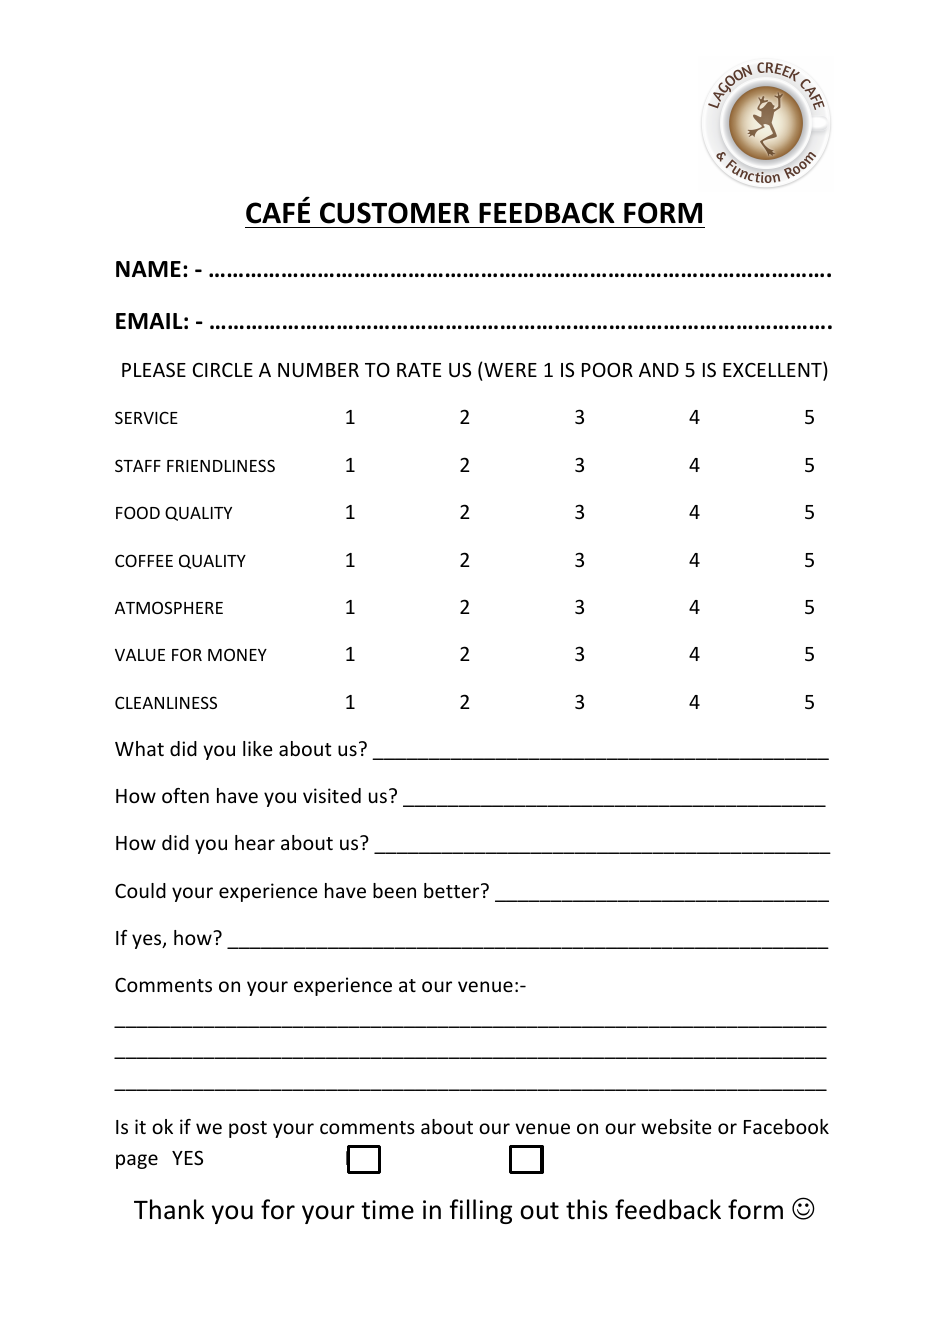 Cafe Customer Feedback Form - Laggon Creek Cafe, Page 1